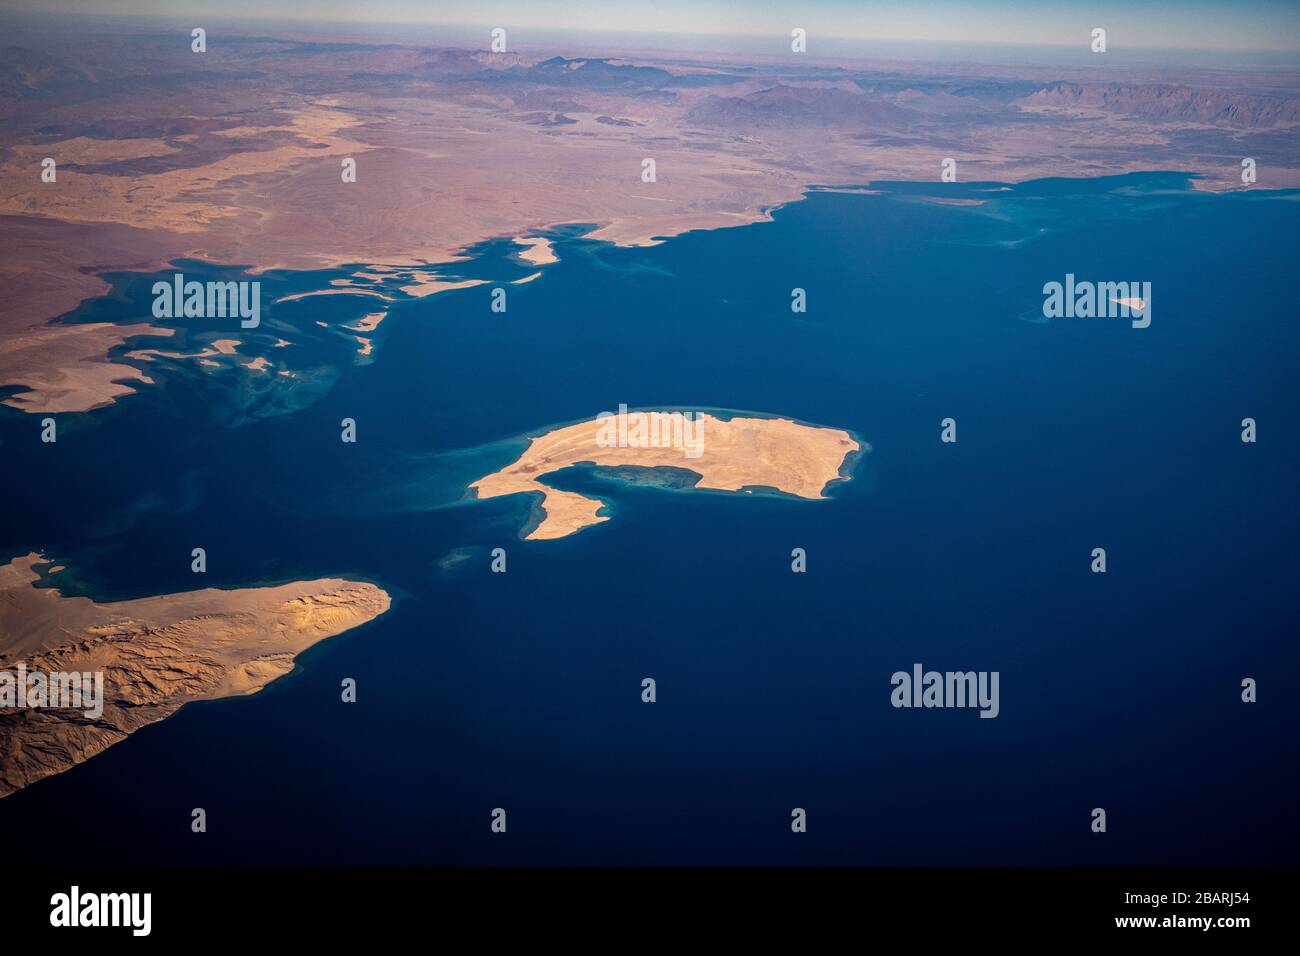 Saudi Arabia Gulf of Aqaba Straits of Tiran Stock Photo